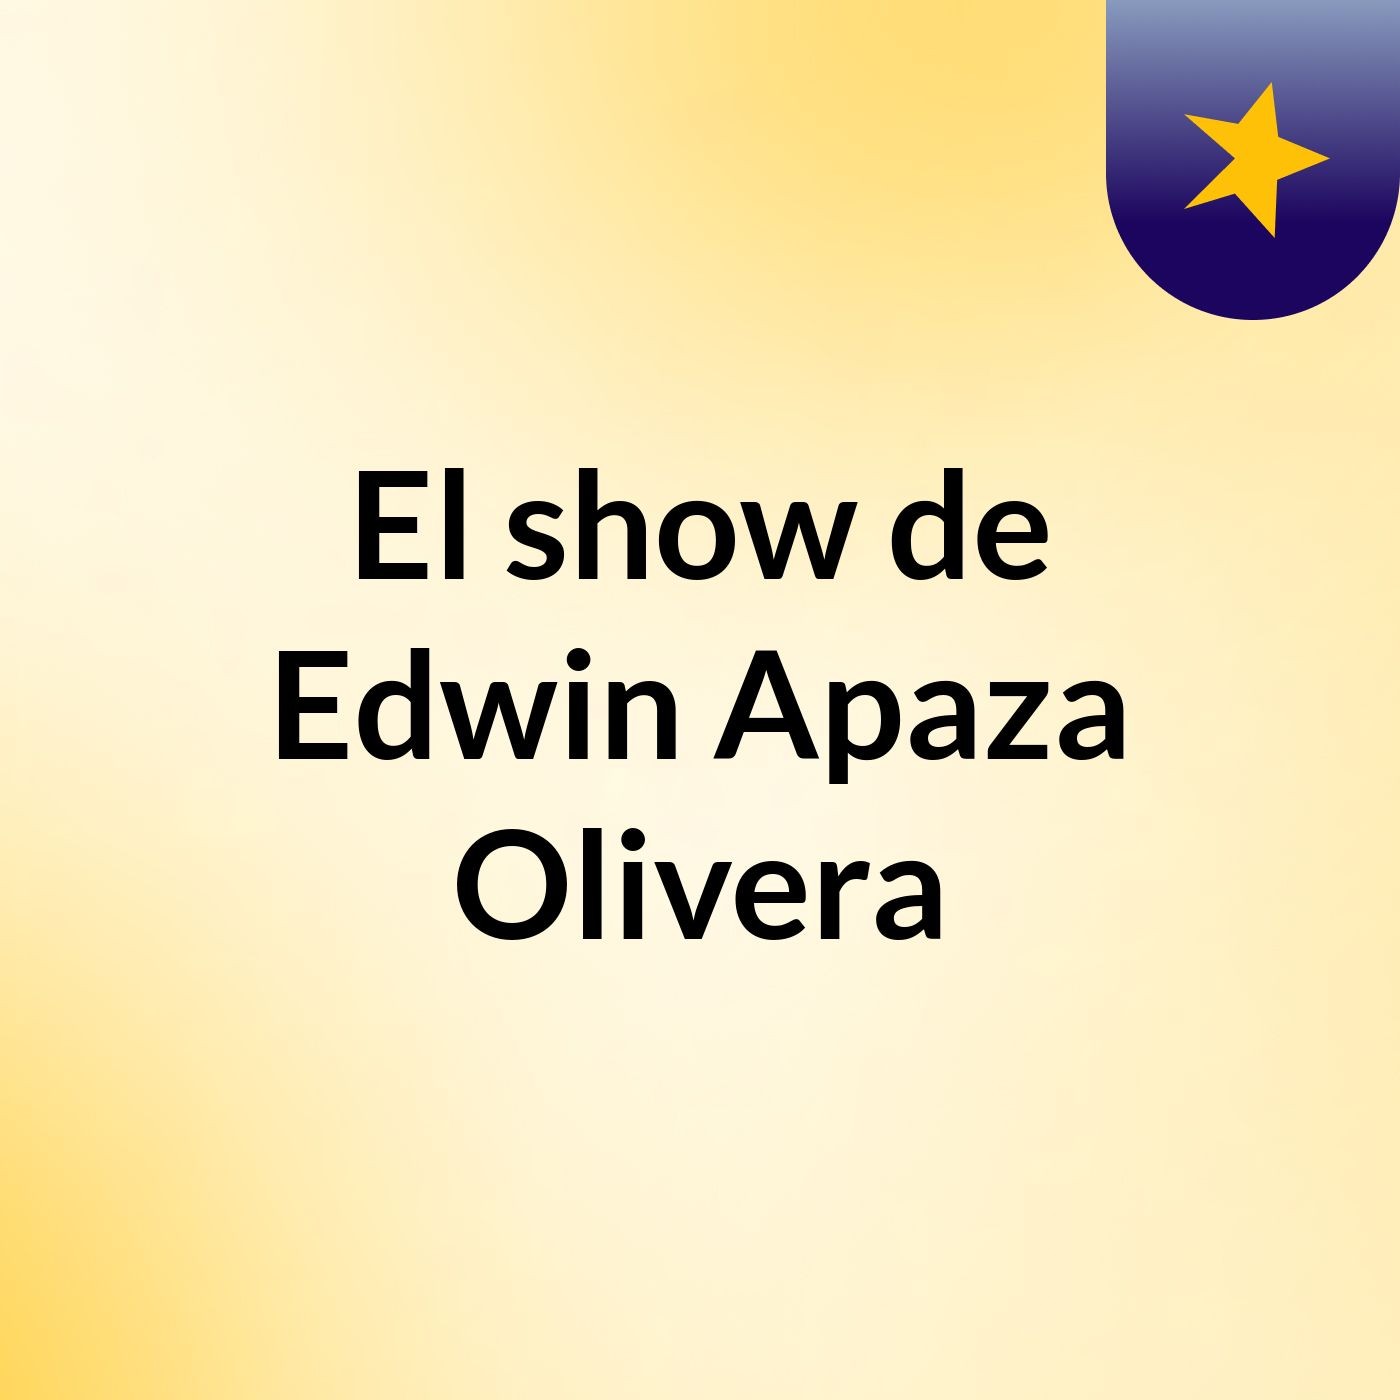 El show de Edwin Apaza Olivera